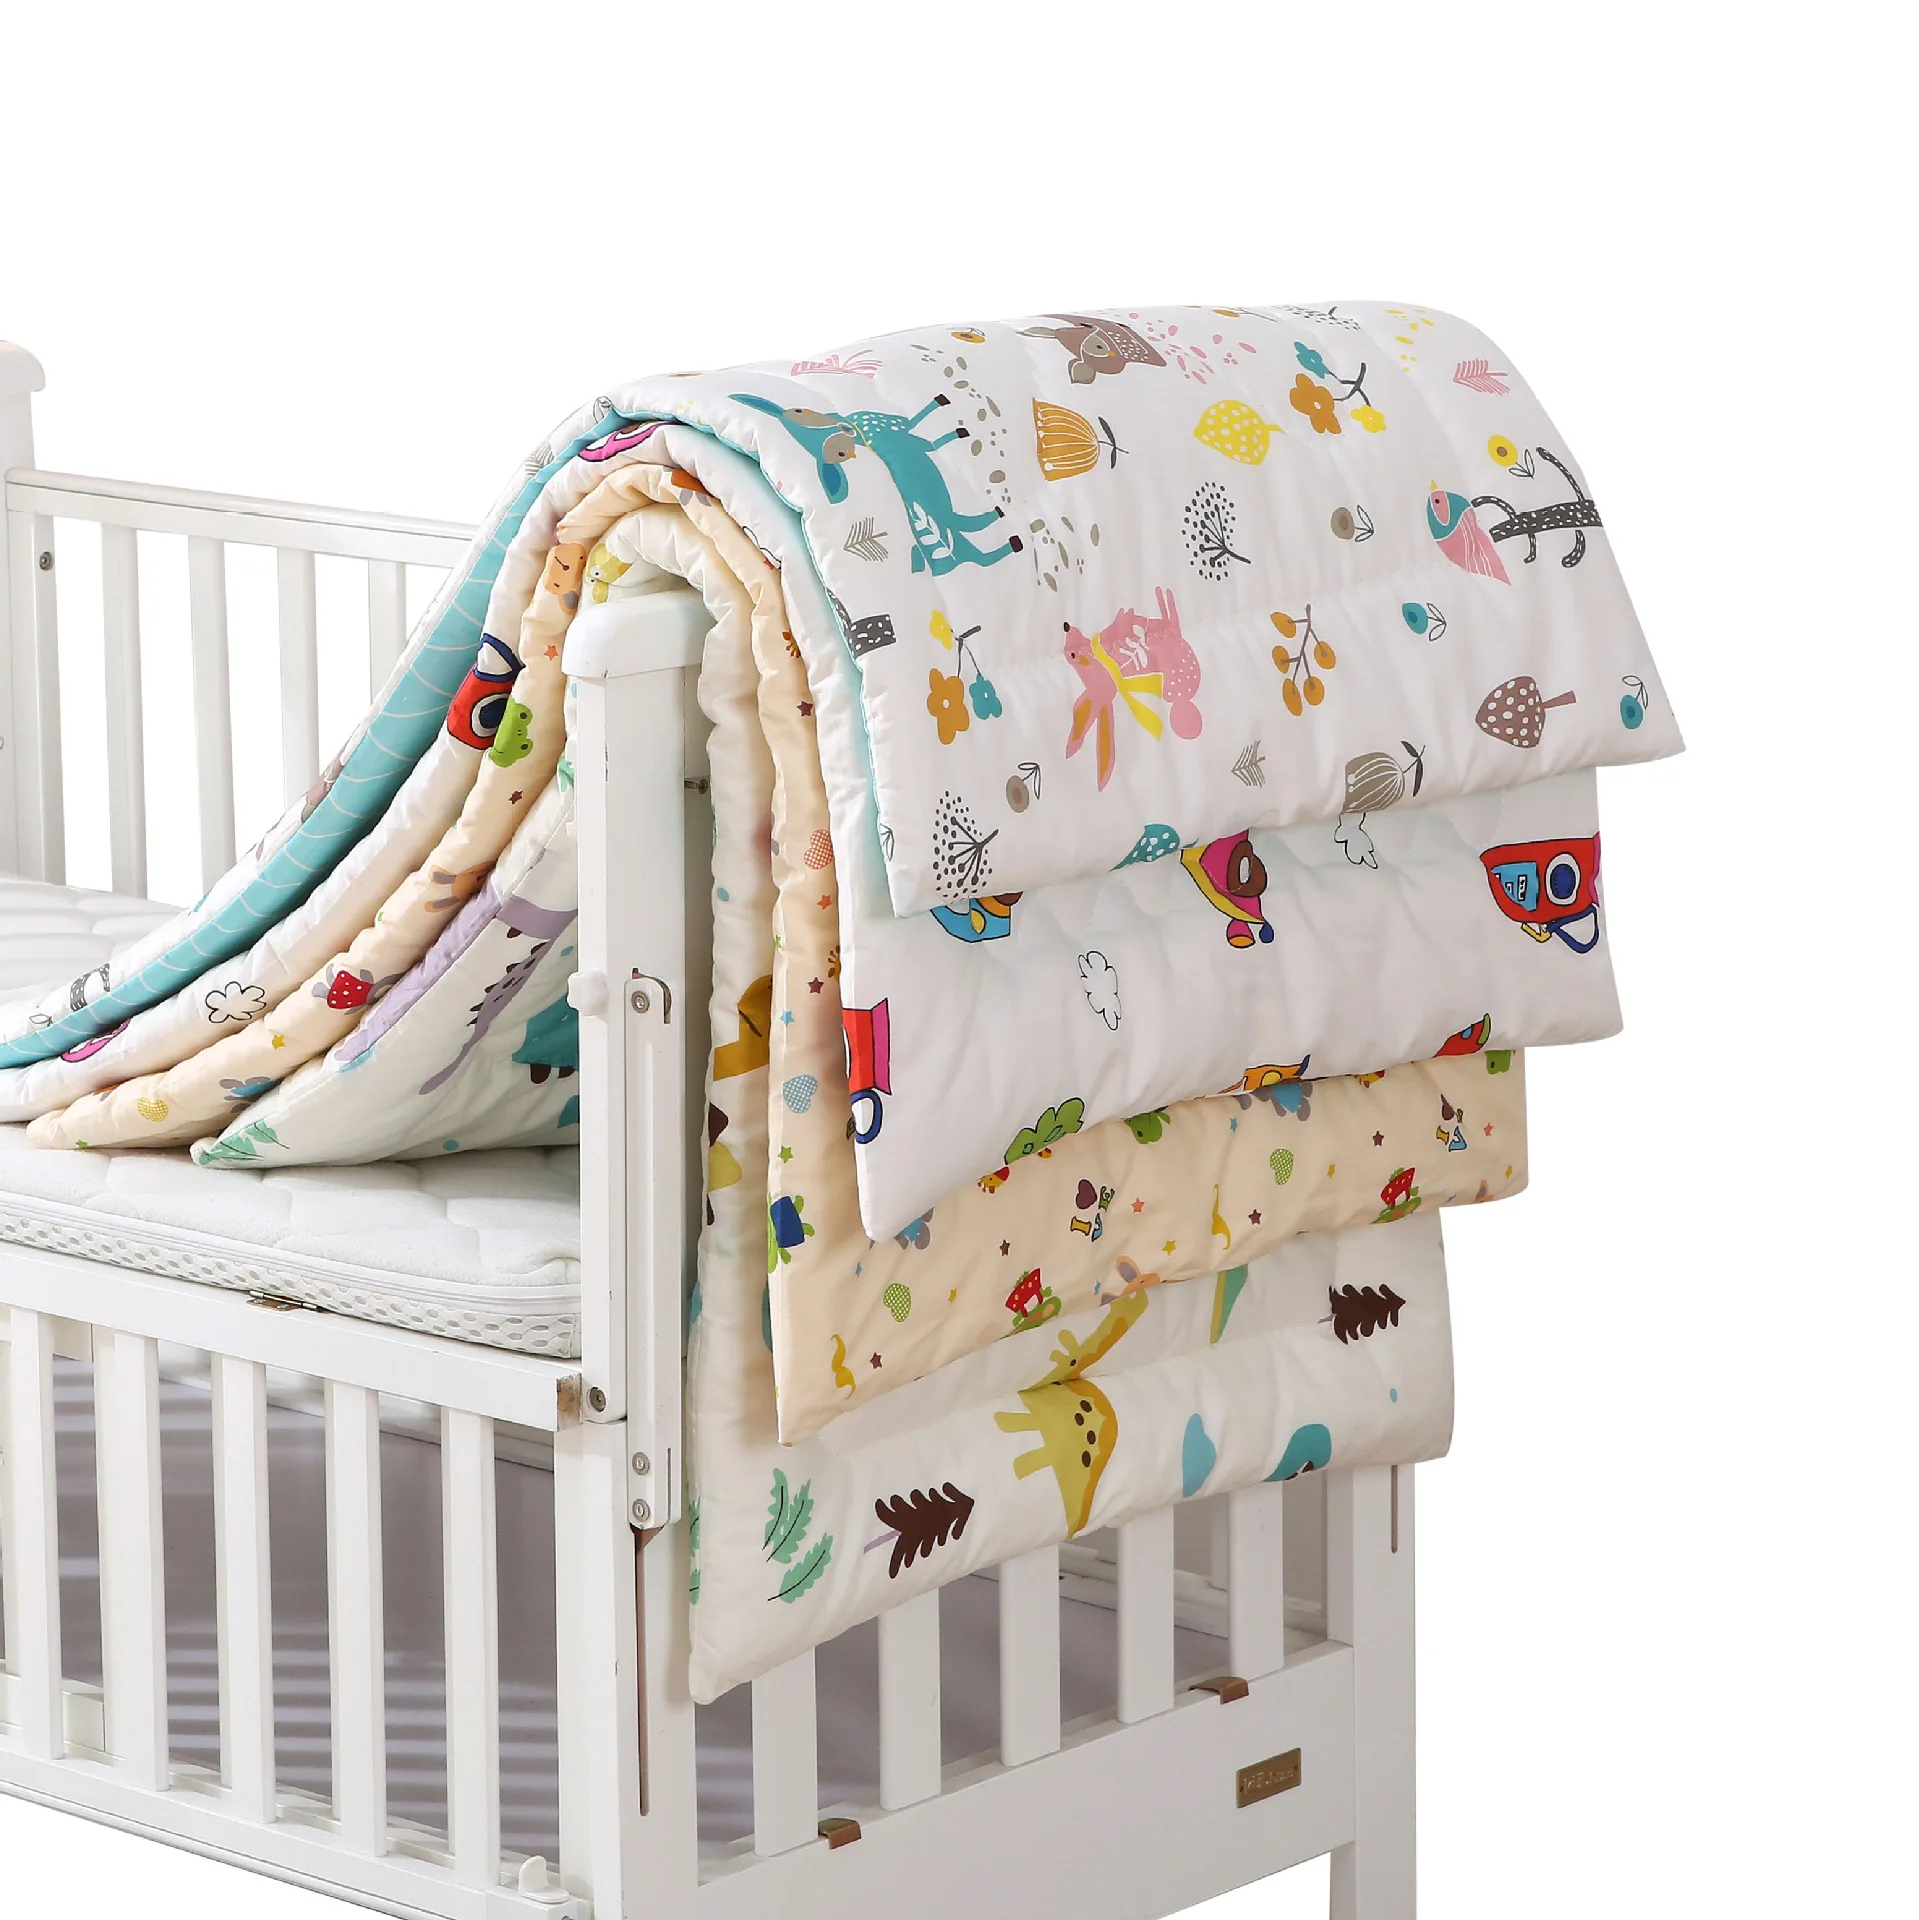 

Baby Bed Mattress Pad Crib Mattress100% Natural Cotton Baby Bedding Set Boys Girls Cute Dinosaur Infant Toddler Bed Set 120x60cm